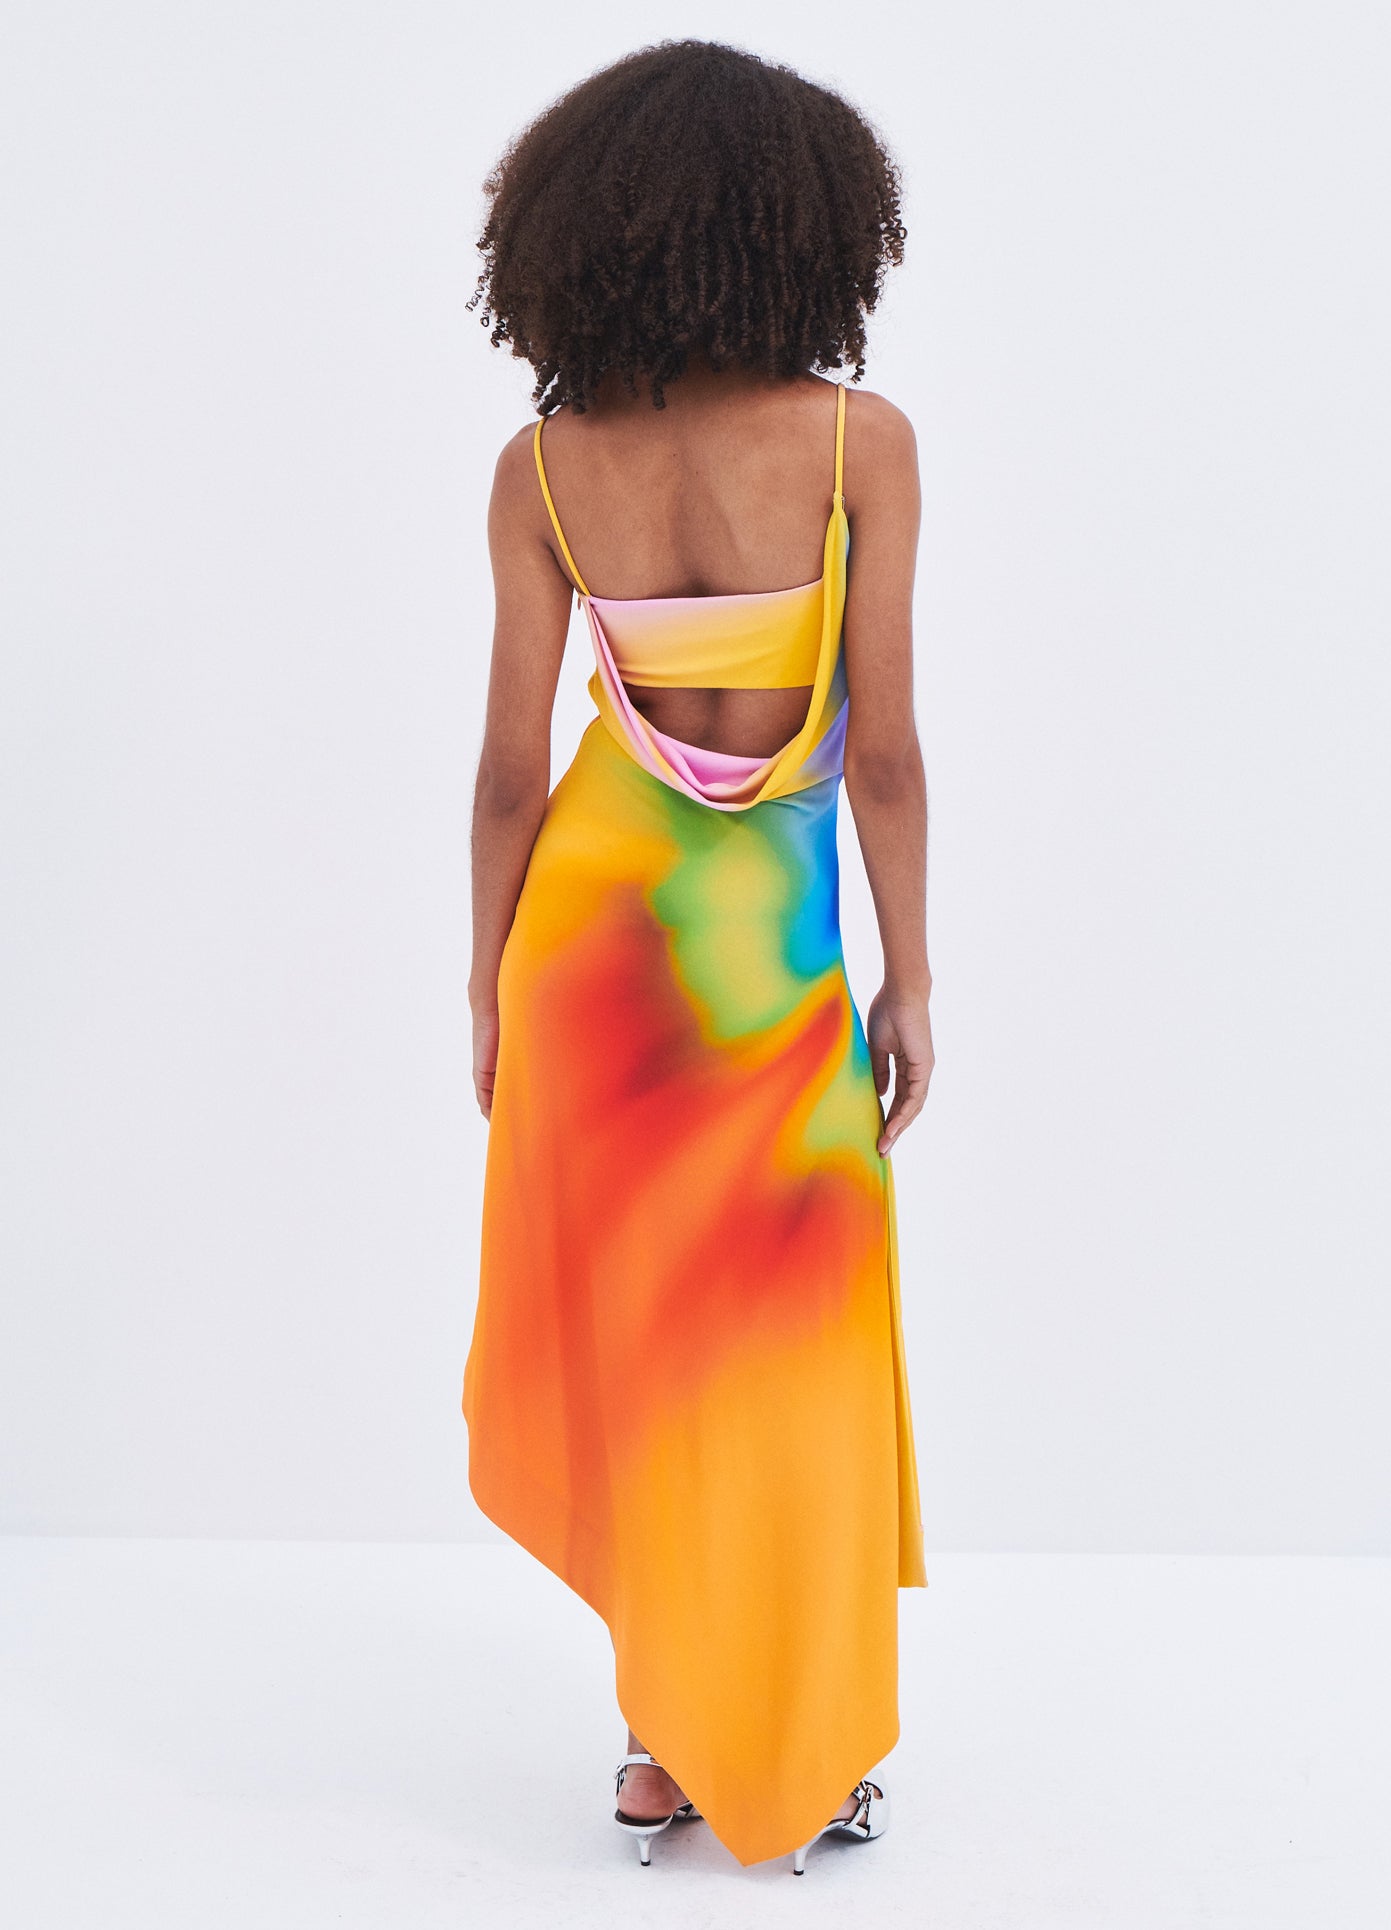 MONSE Rainbow Orchid Slip Dress in Multi Colors on model full back view